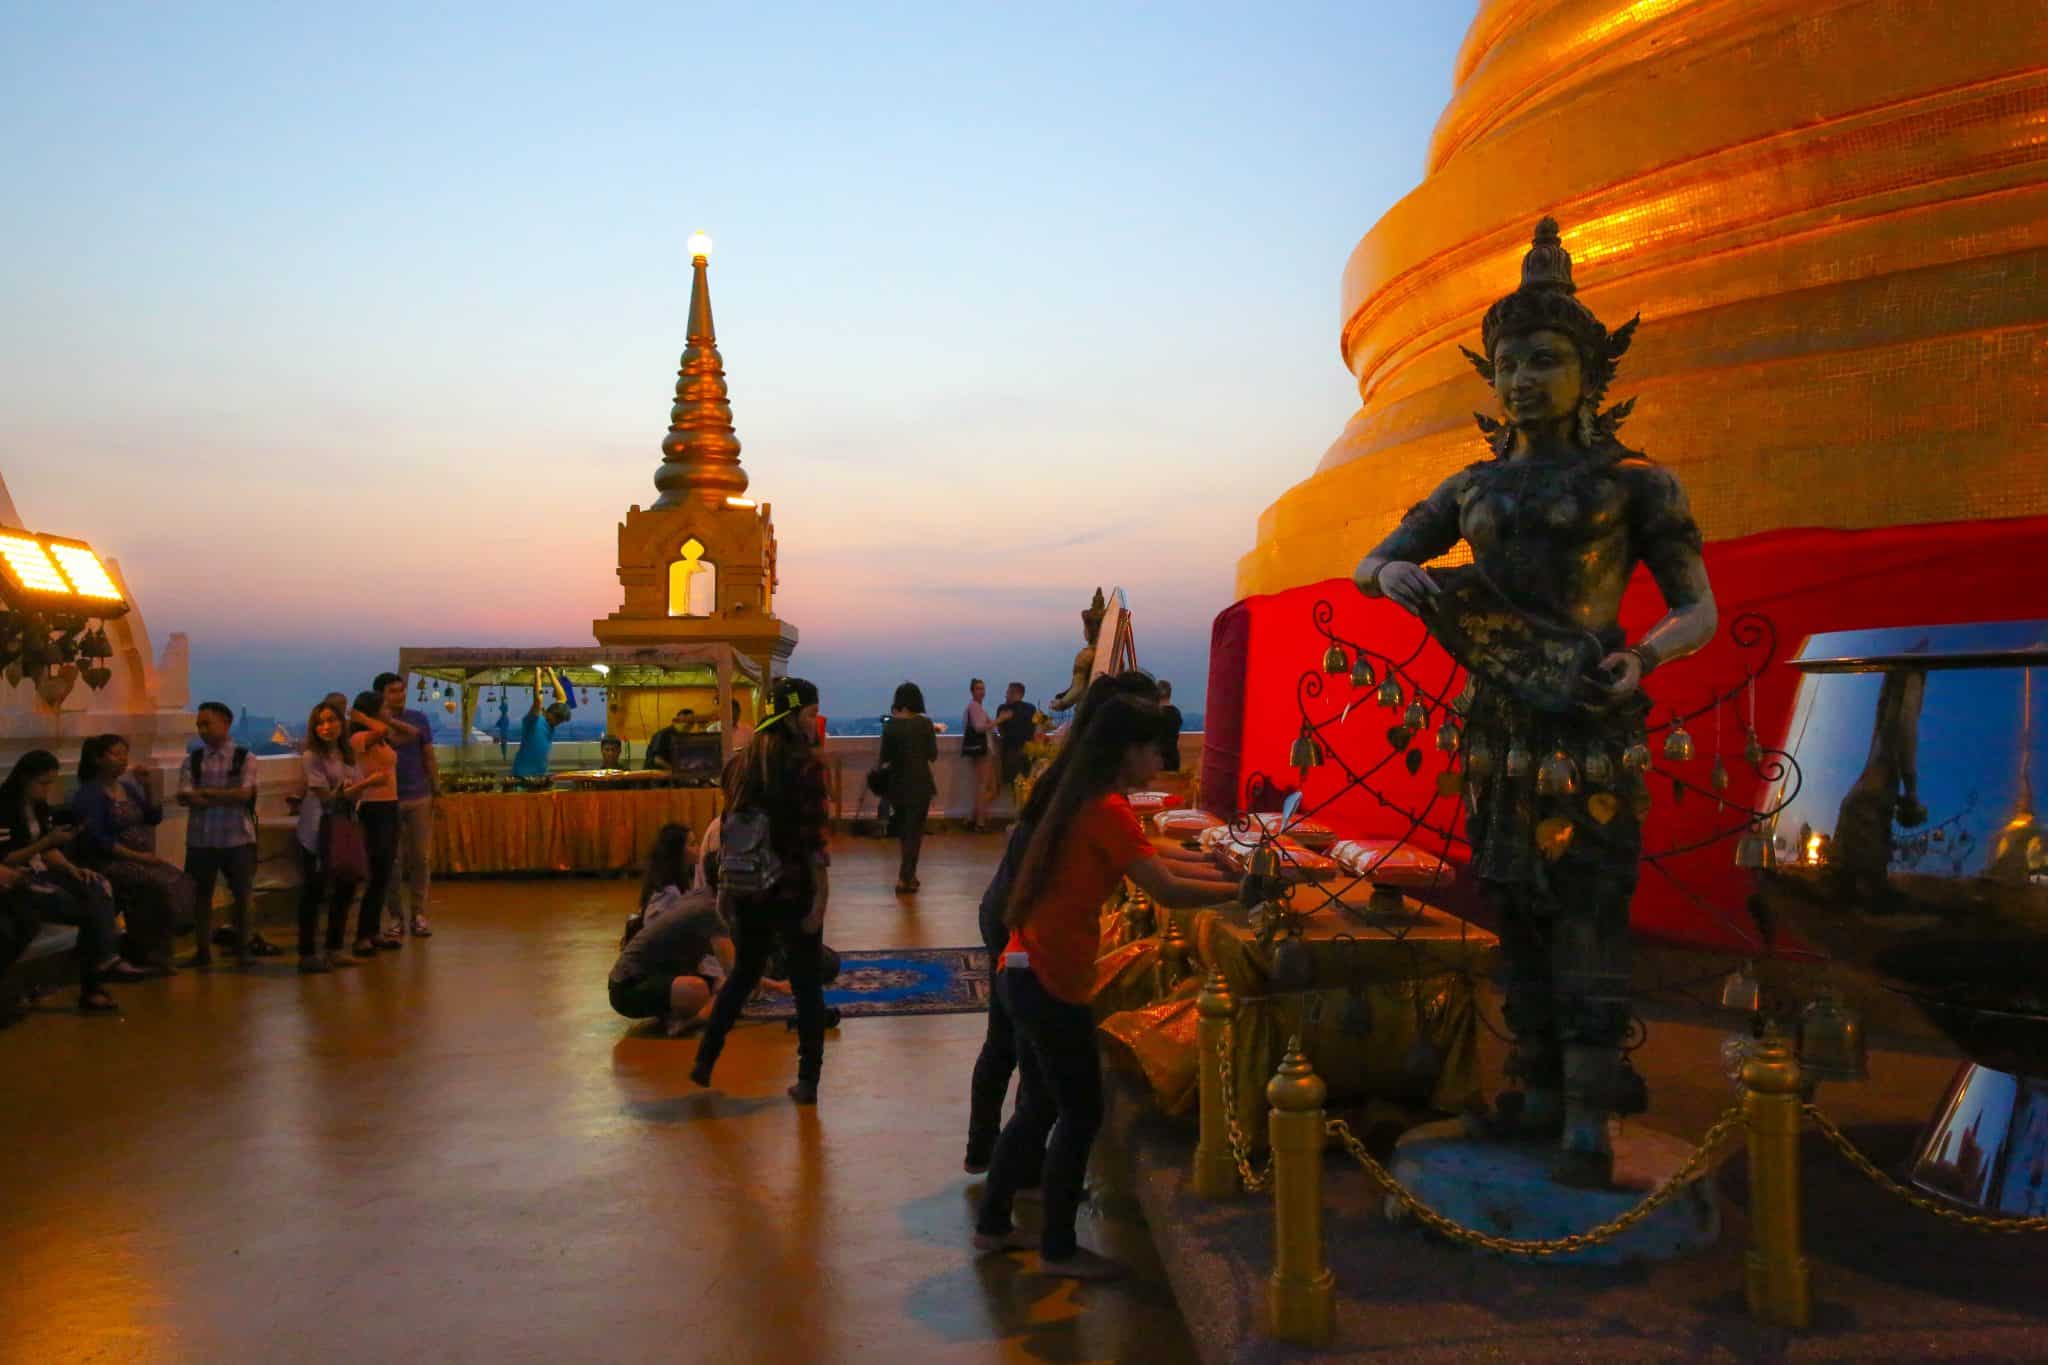 The Golden Mount Temple and Wat Saket in Bangkok, Thailand